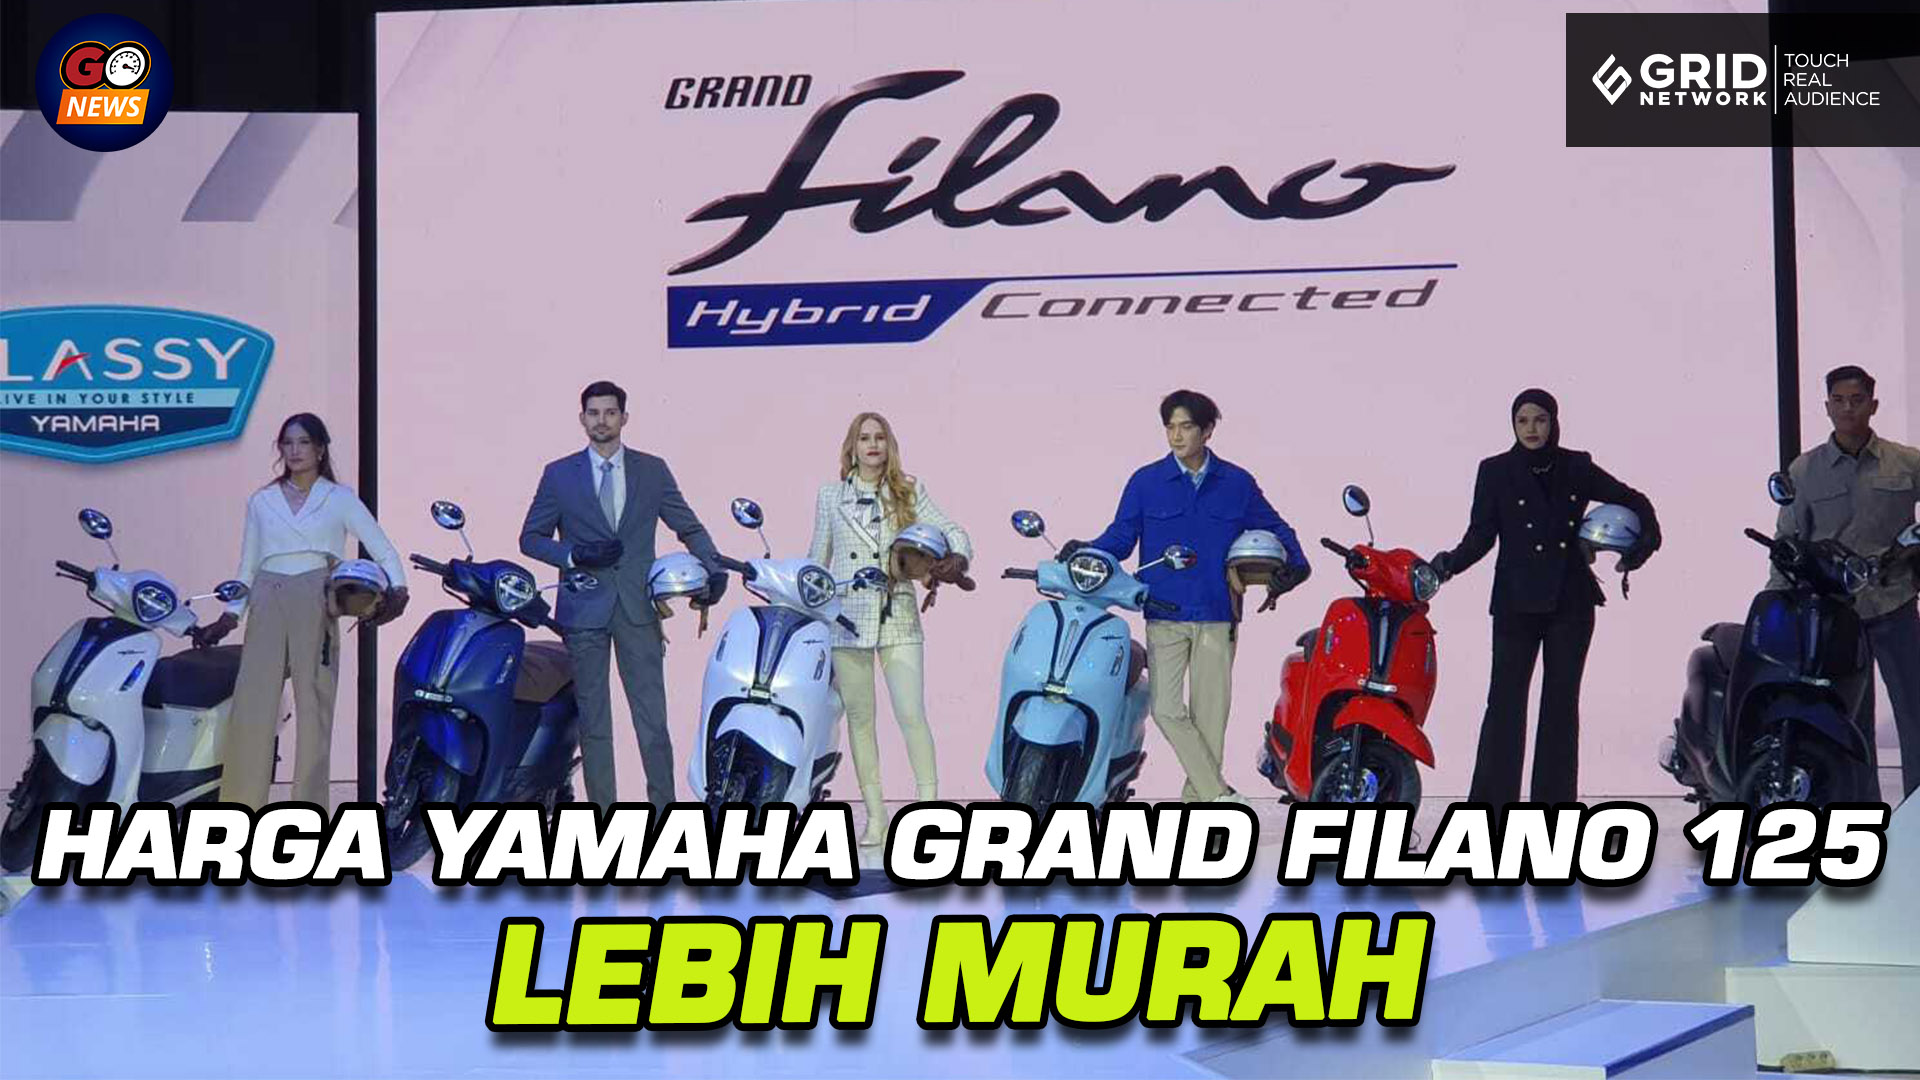 Kupas Harga dan Bedah Fitur Yamaha Grand Filano 125 Hybrid Connected | GridOto News